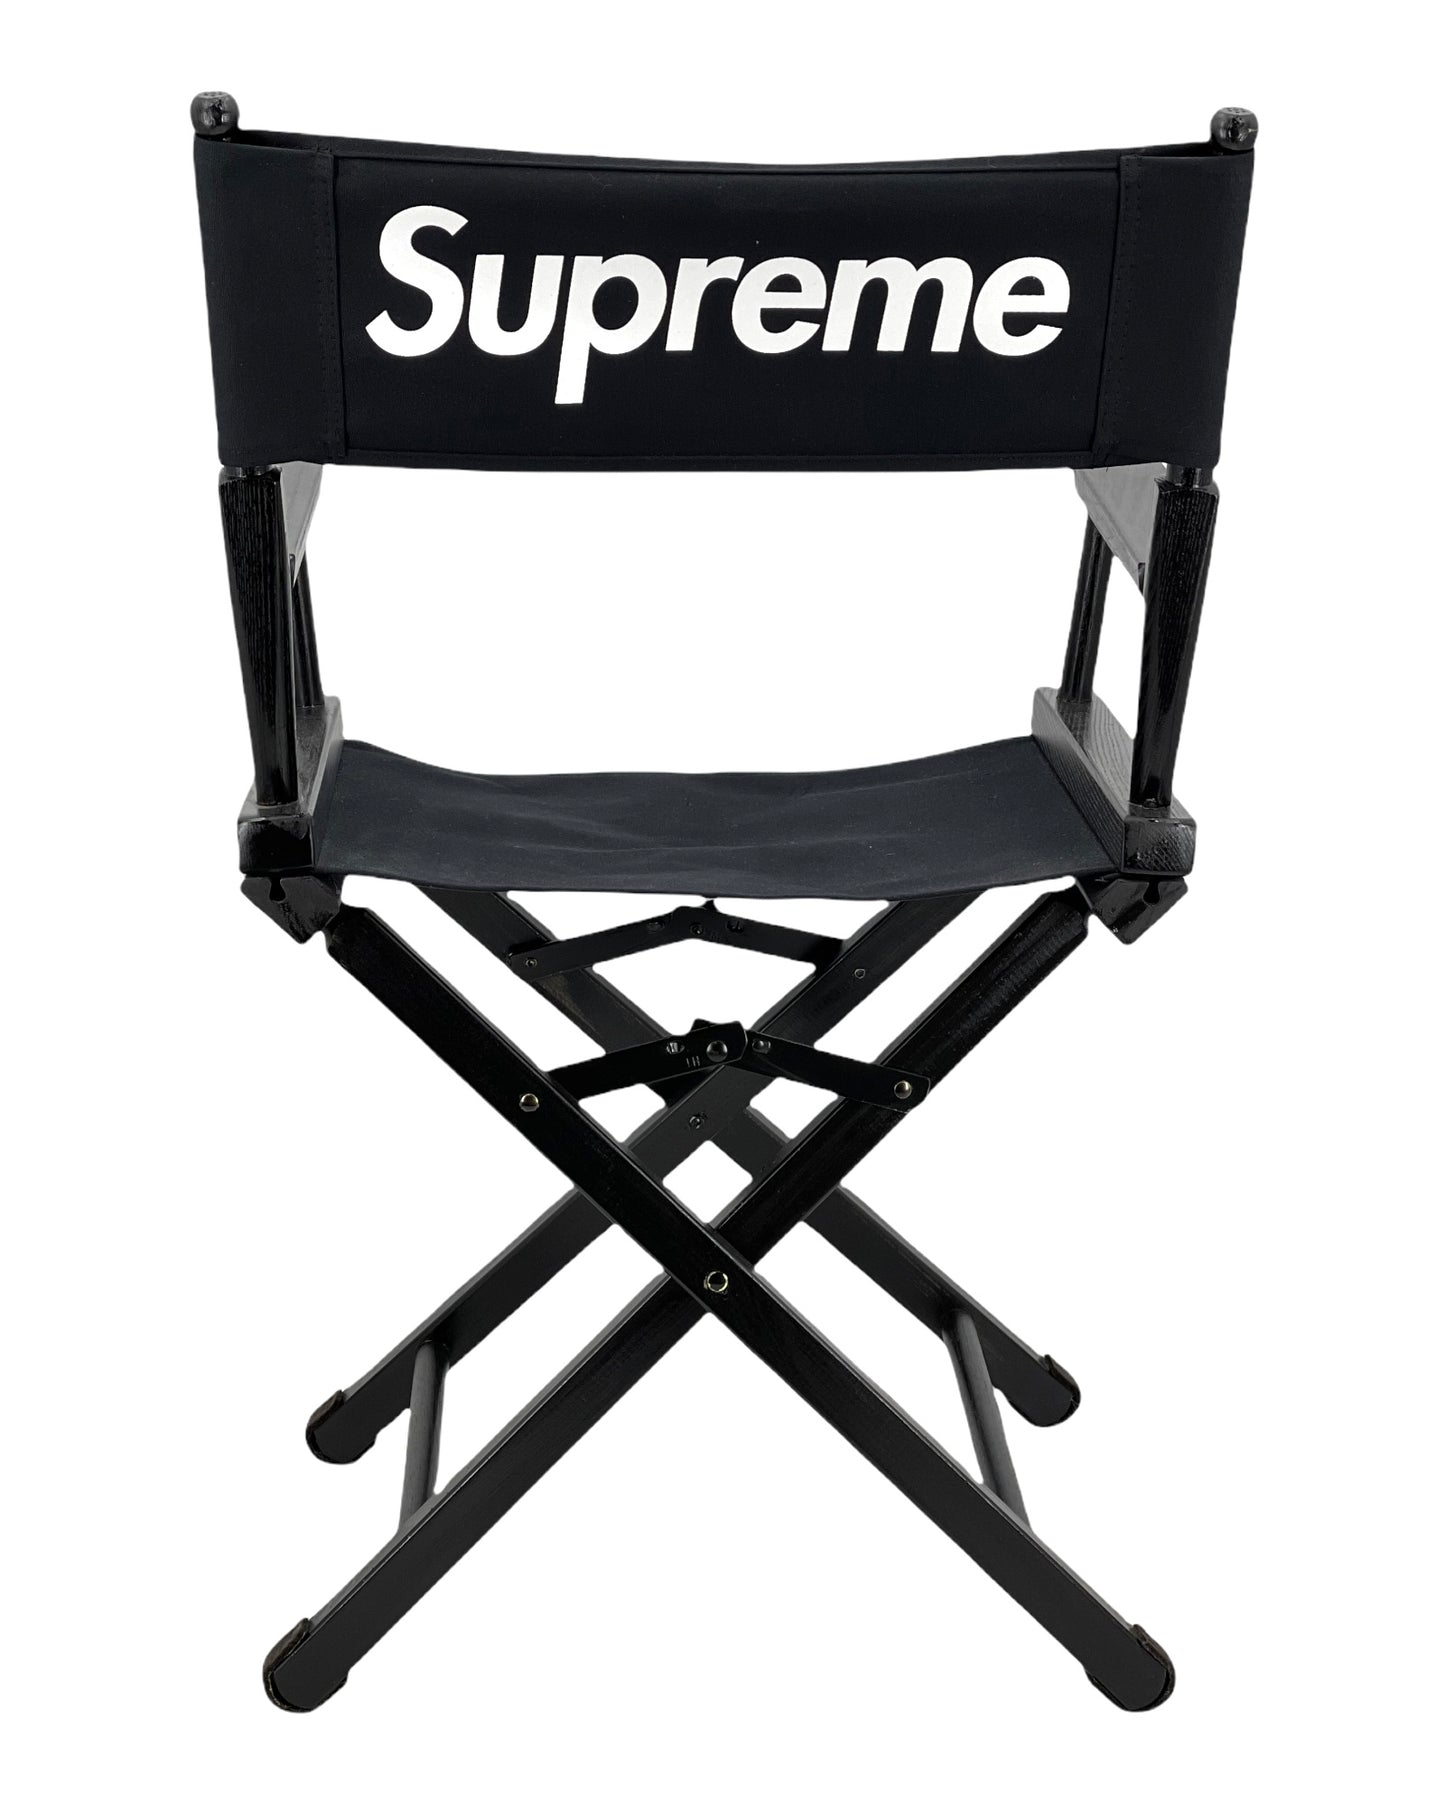 Supreme Director’s Chair Black